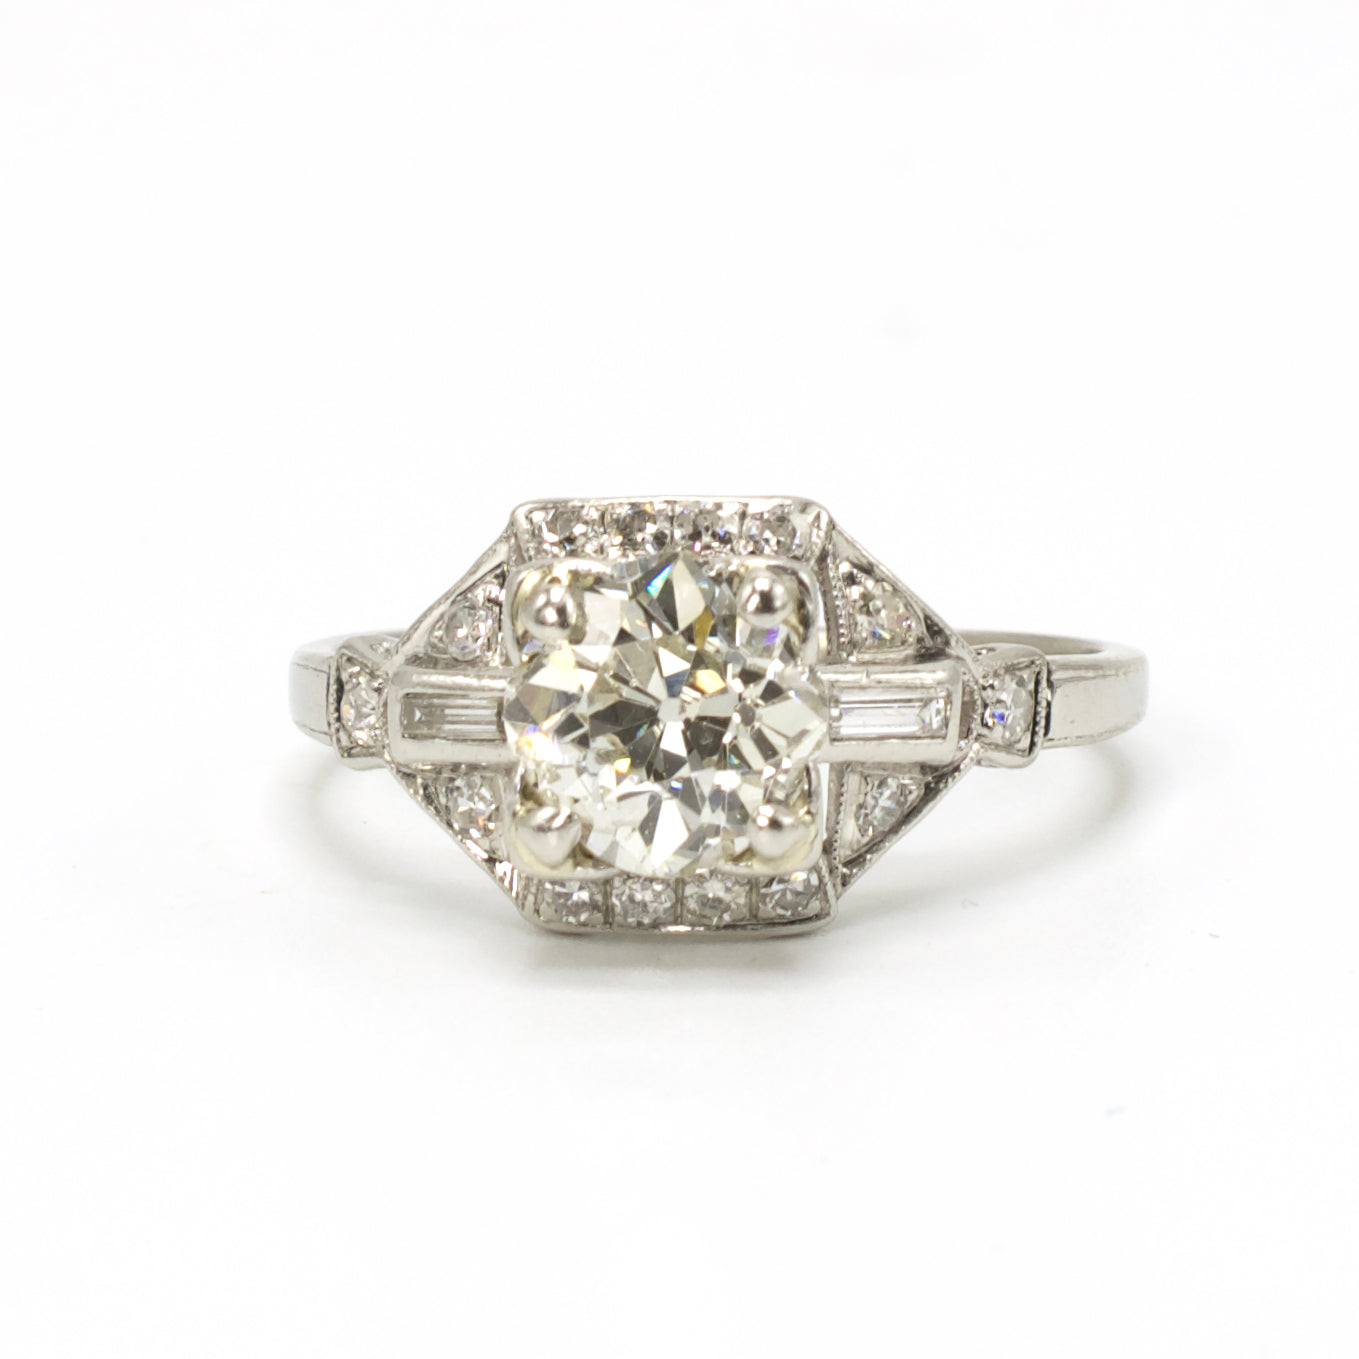 Art Deco 1.75 ct Old Mine Cut Diamond and Platinum Ring